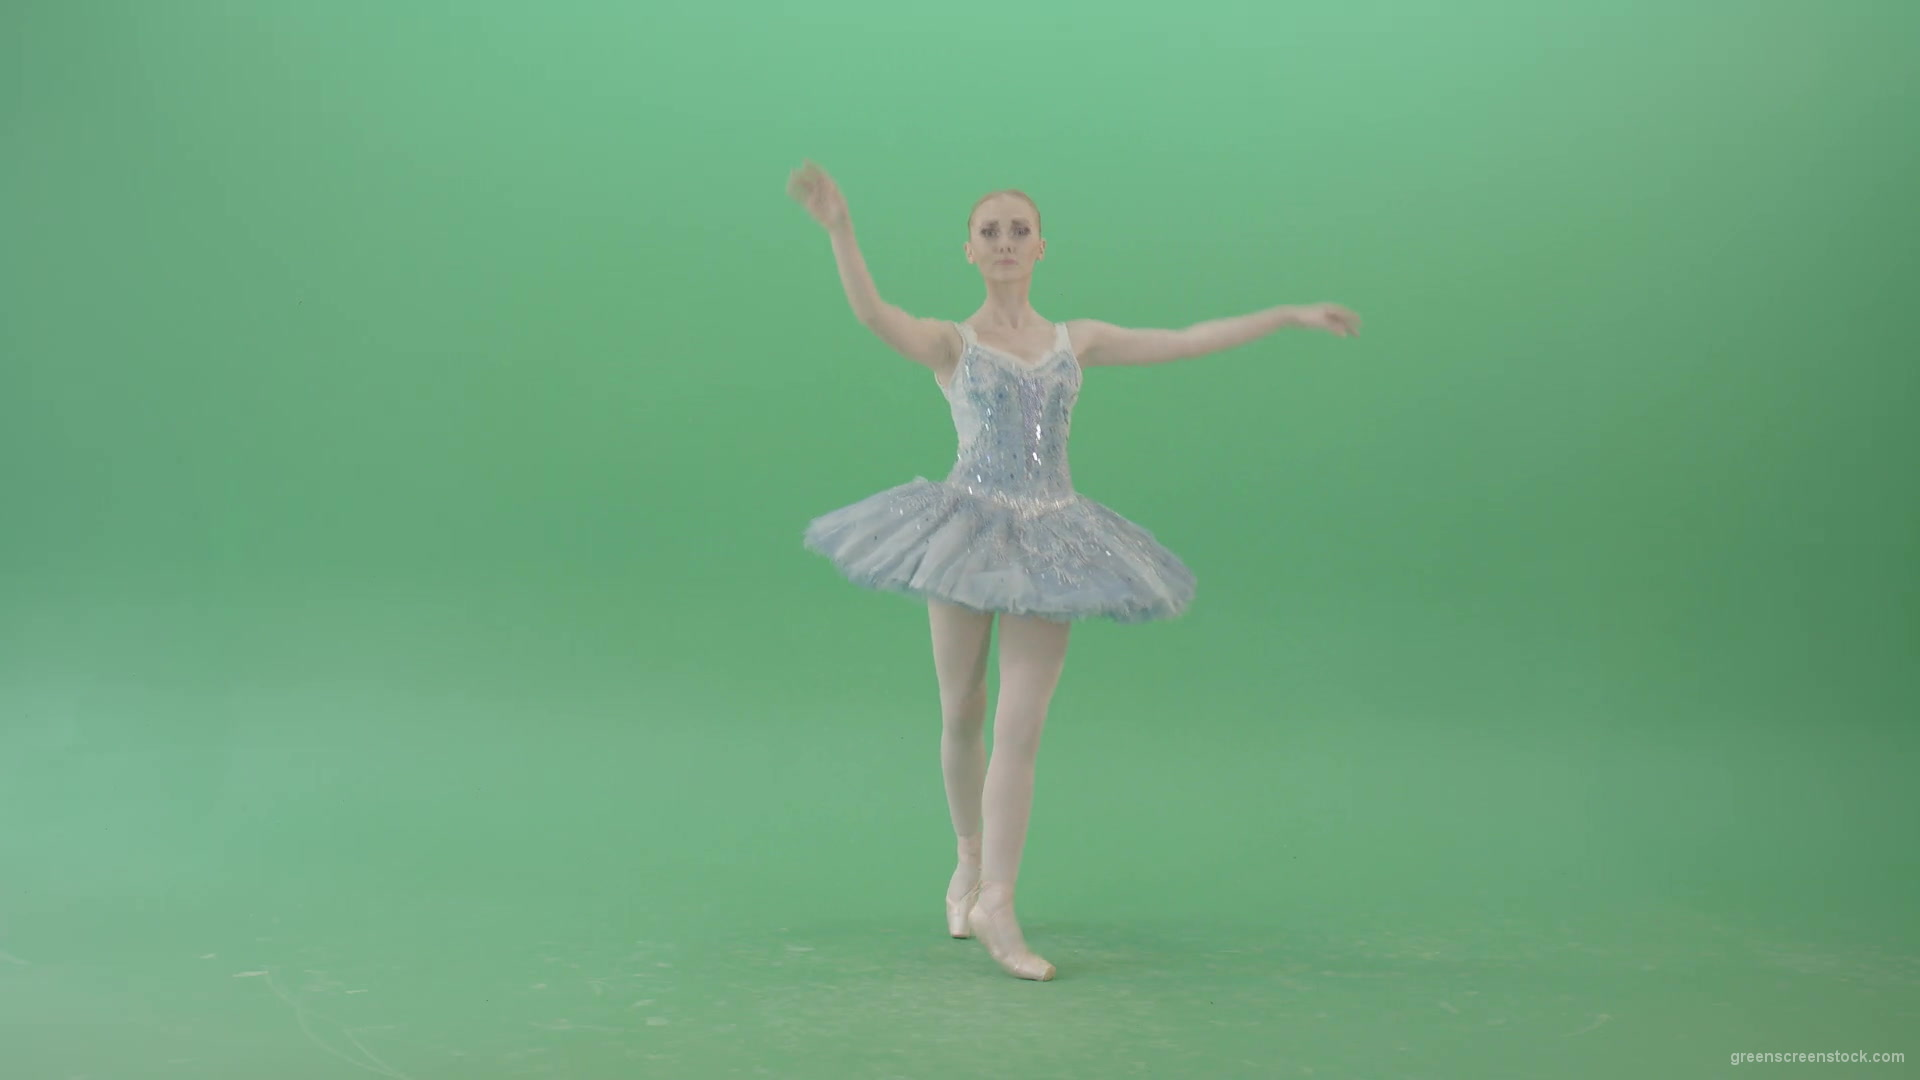 Beauty-blonde-ballerin-ballet-dancing-girl-in-blue-dress-spinning-over-green-screen-4K-Video-Footag-30fps-1920_004 Green Screen Stock